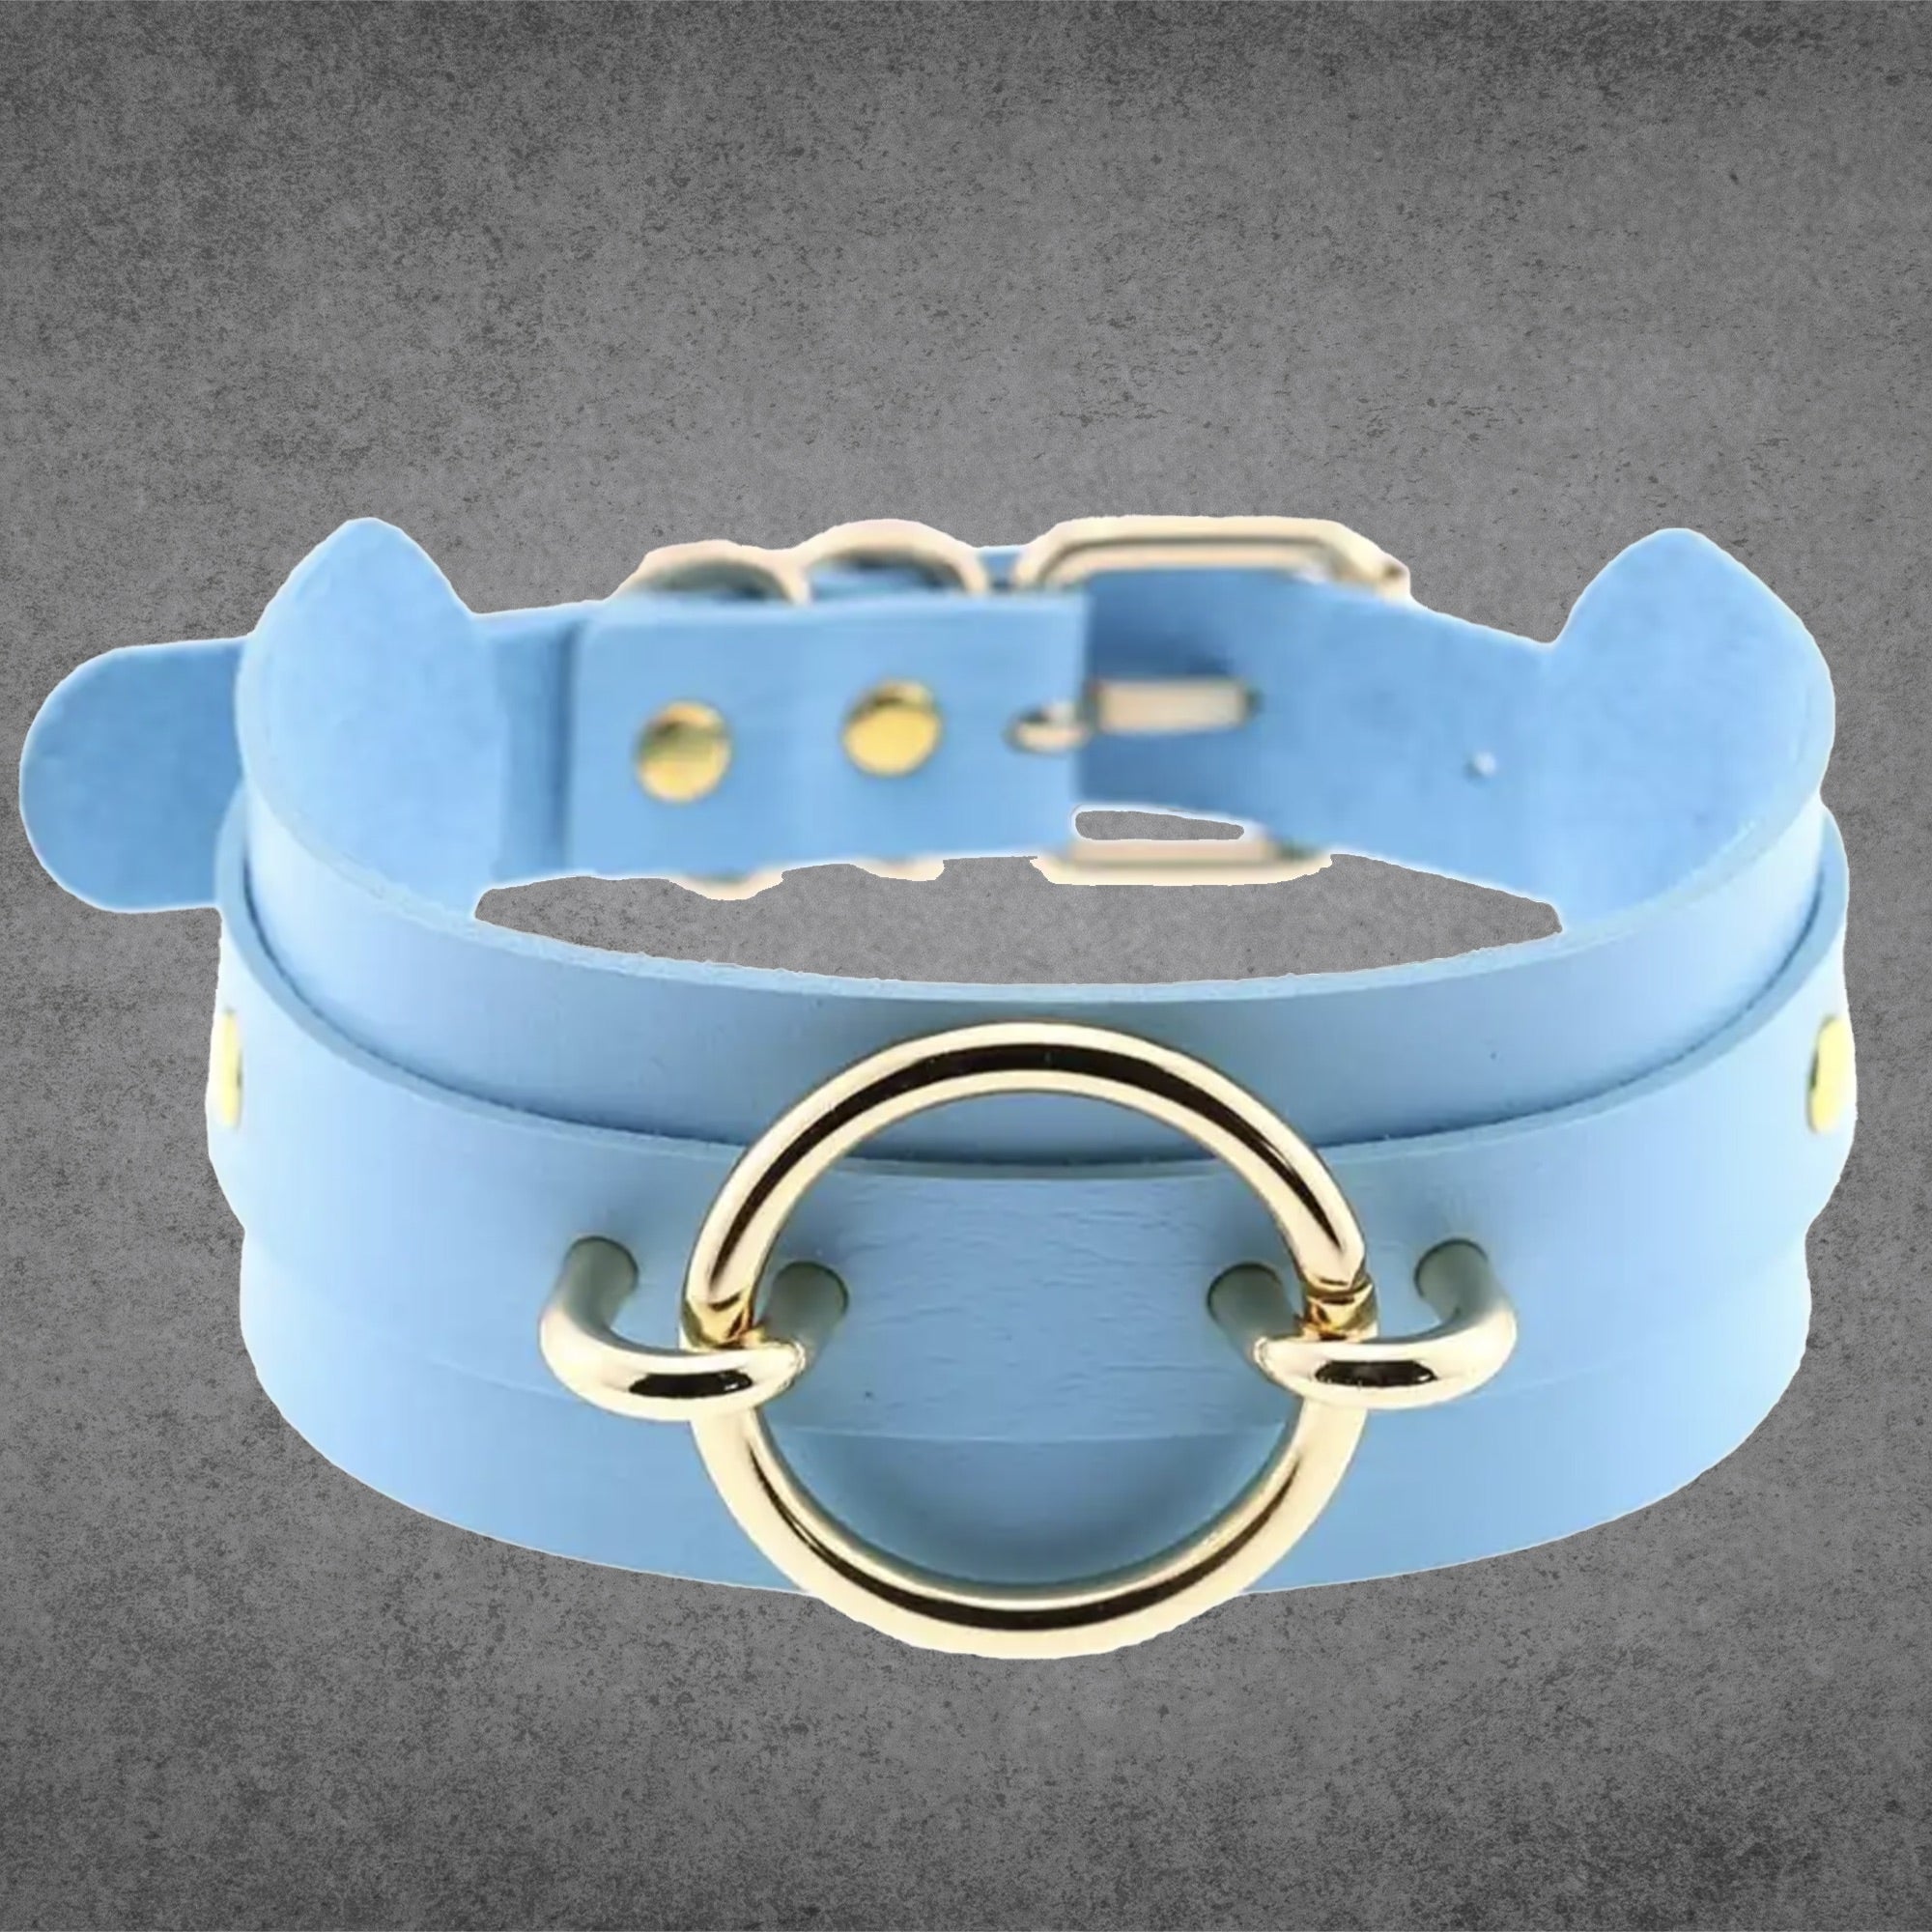 Fixed O Ring Choker Collar - Baby Blue & Gold